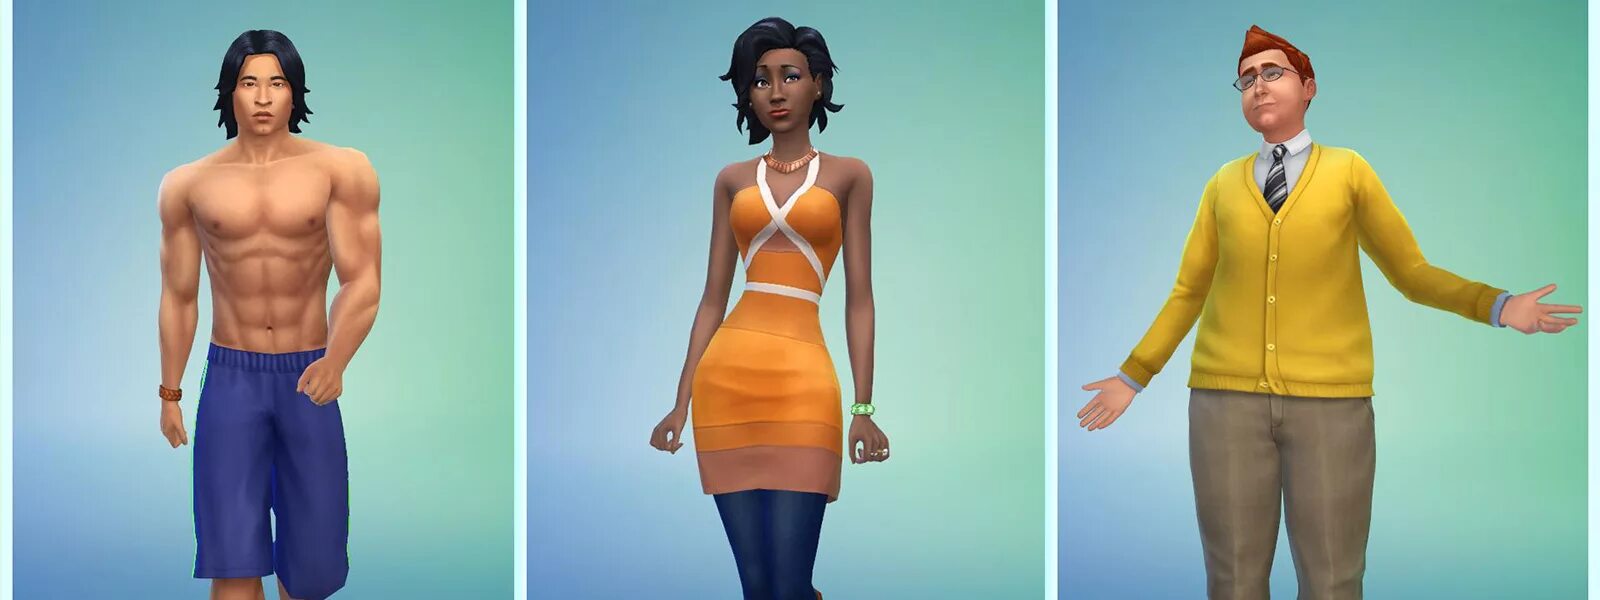 Sims 4 изменения персонажей. Симс 4 герои. Симс 4 персонажи. Симс 4 люди. SIMS 4 SIM.